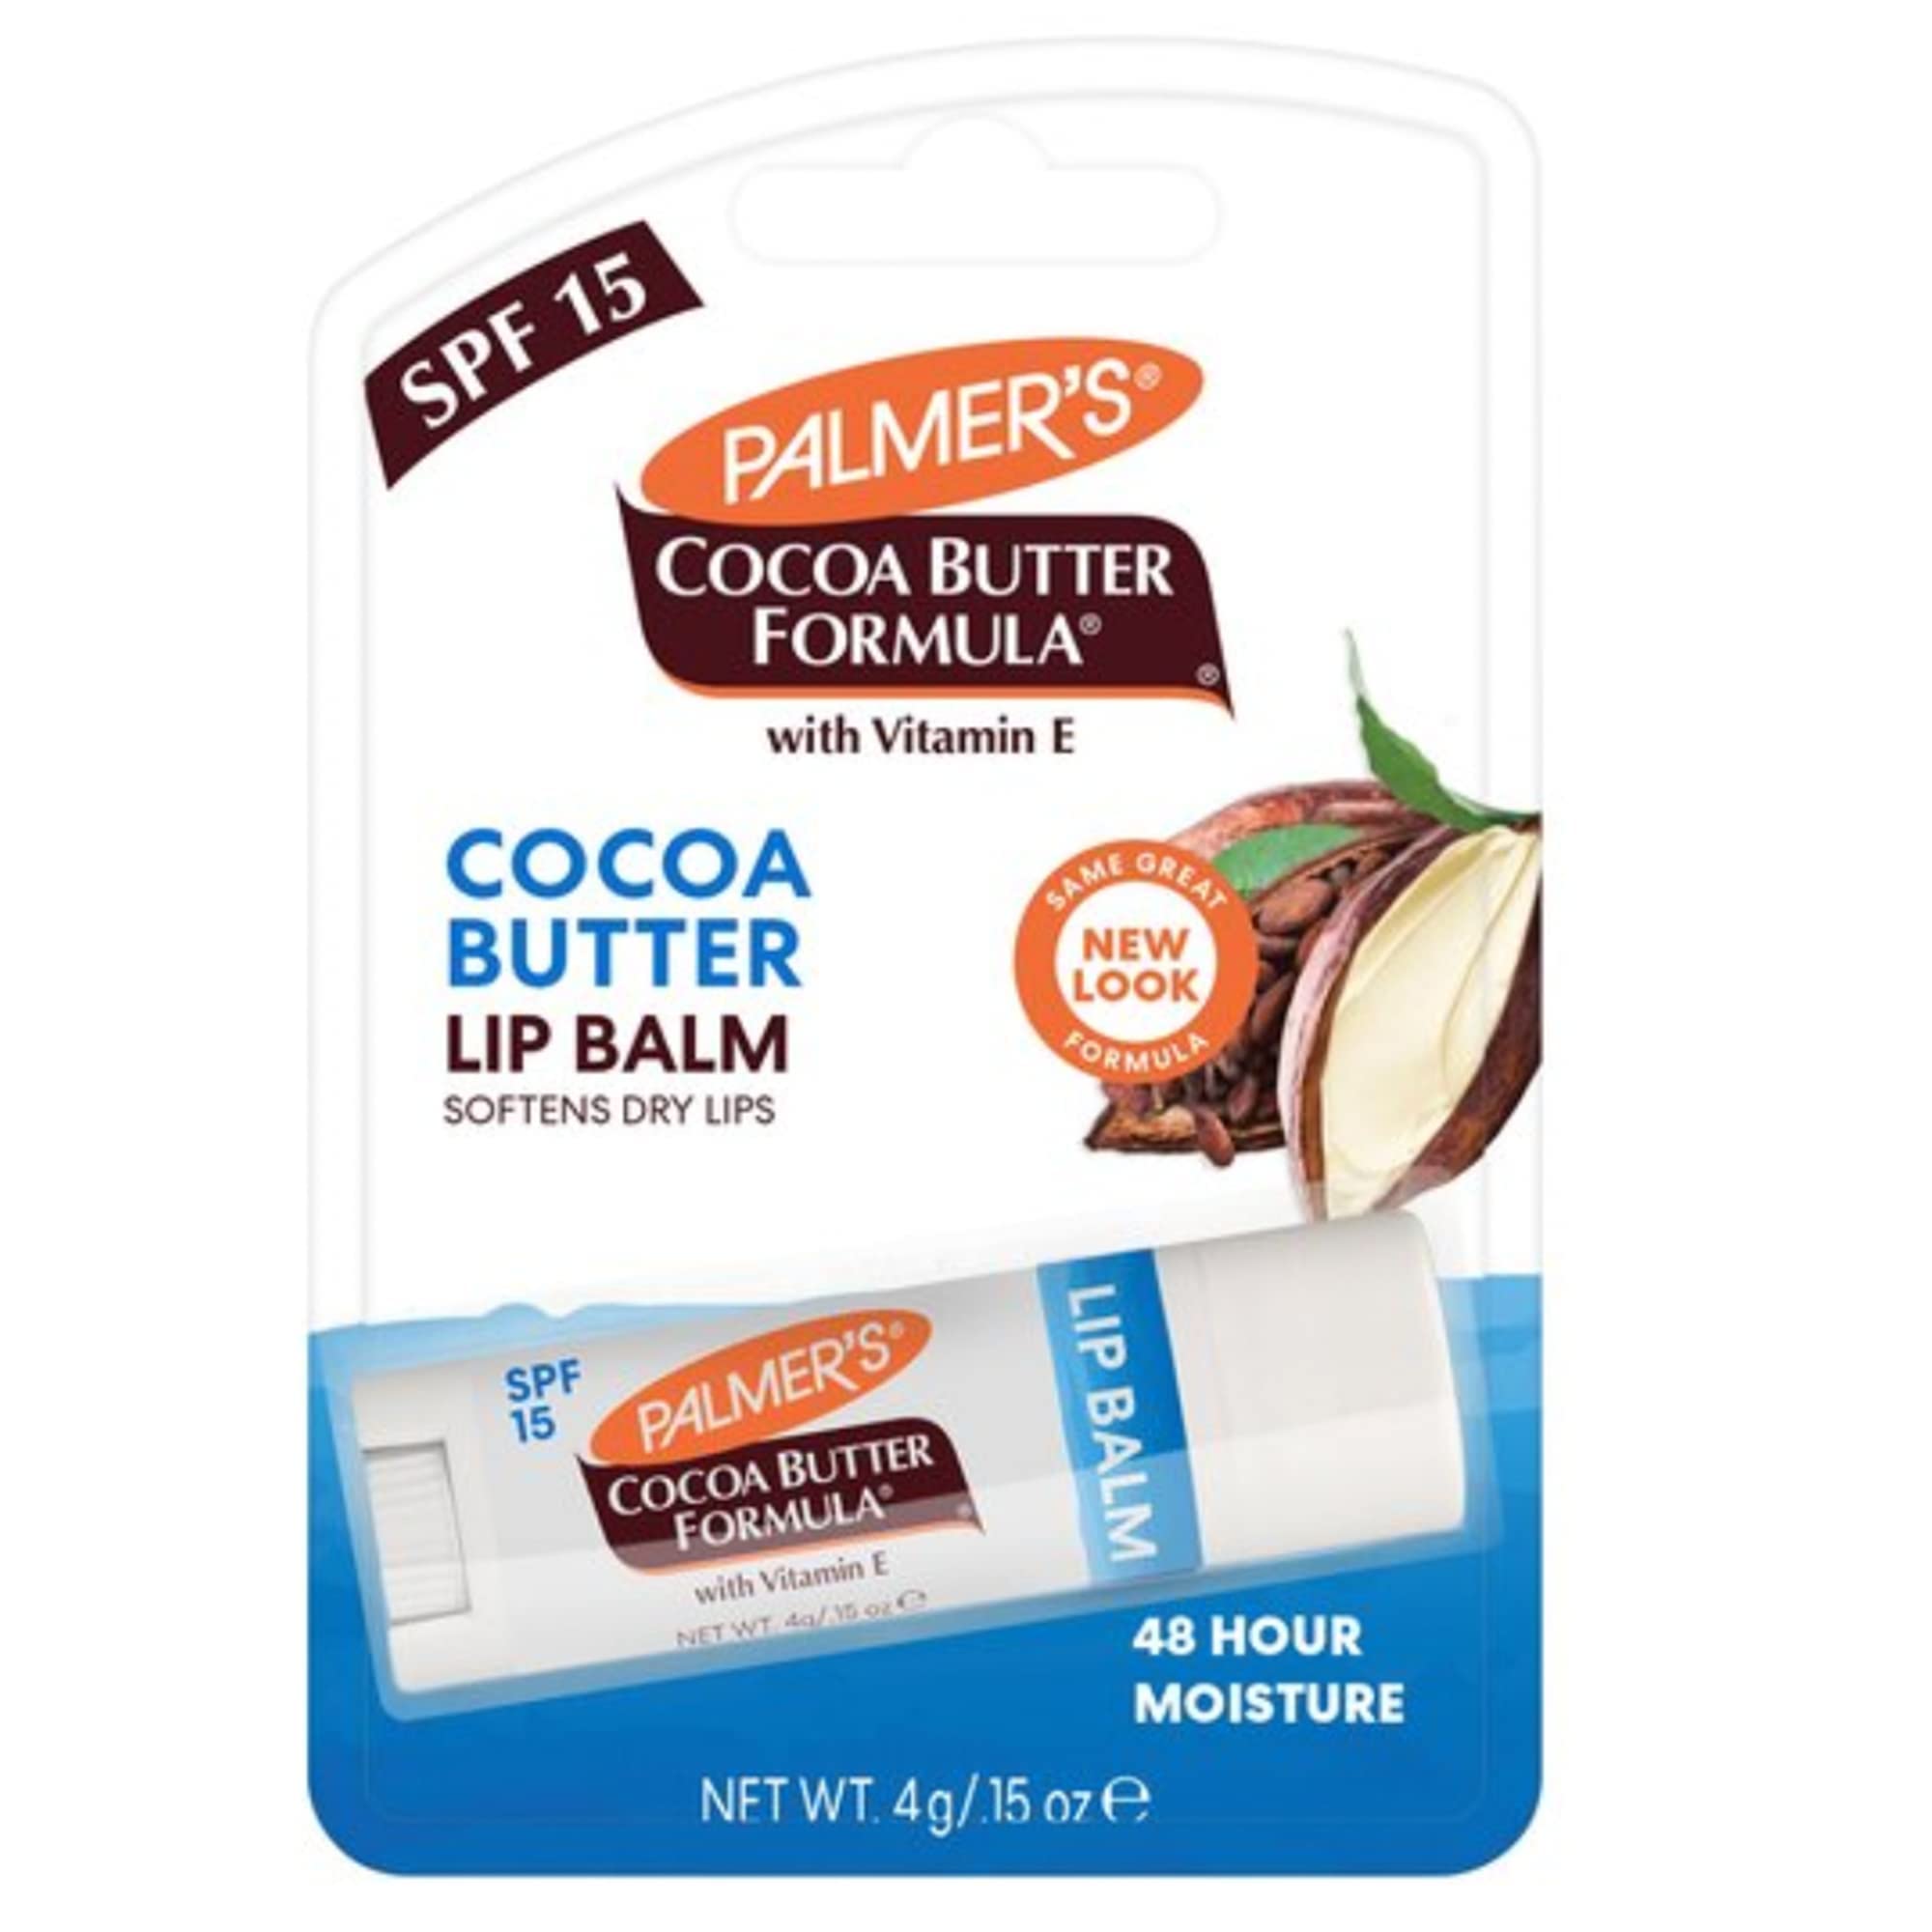 Palmers Cocoa Butter Formula Original Ultra Moisturising Lip Balm with SPF 15 4g